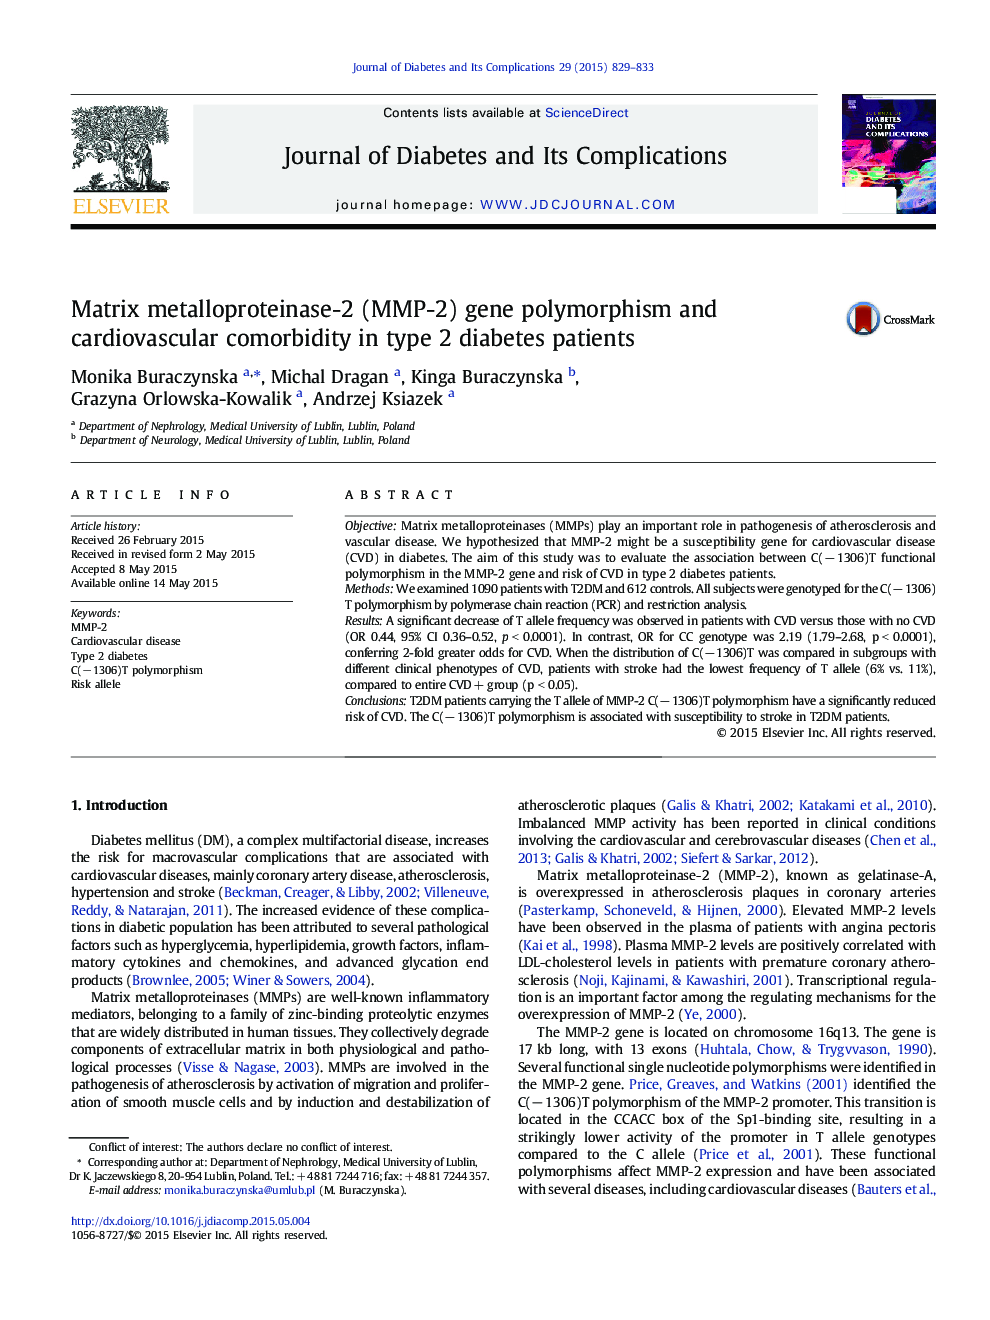 Matrix metalloproteinase-2 (MMP-2) gene polymorphism and cardiovascular comorbidity in type 2 diabetes patients